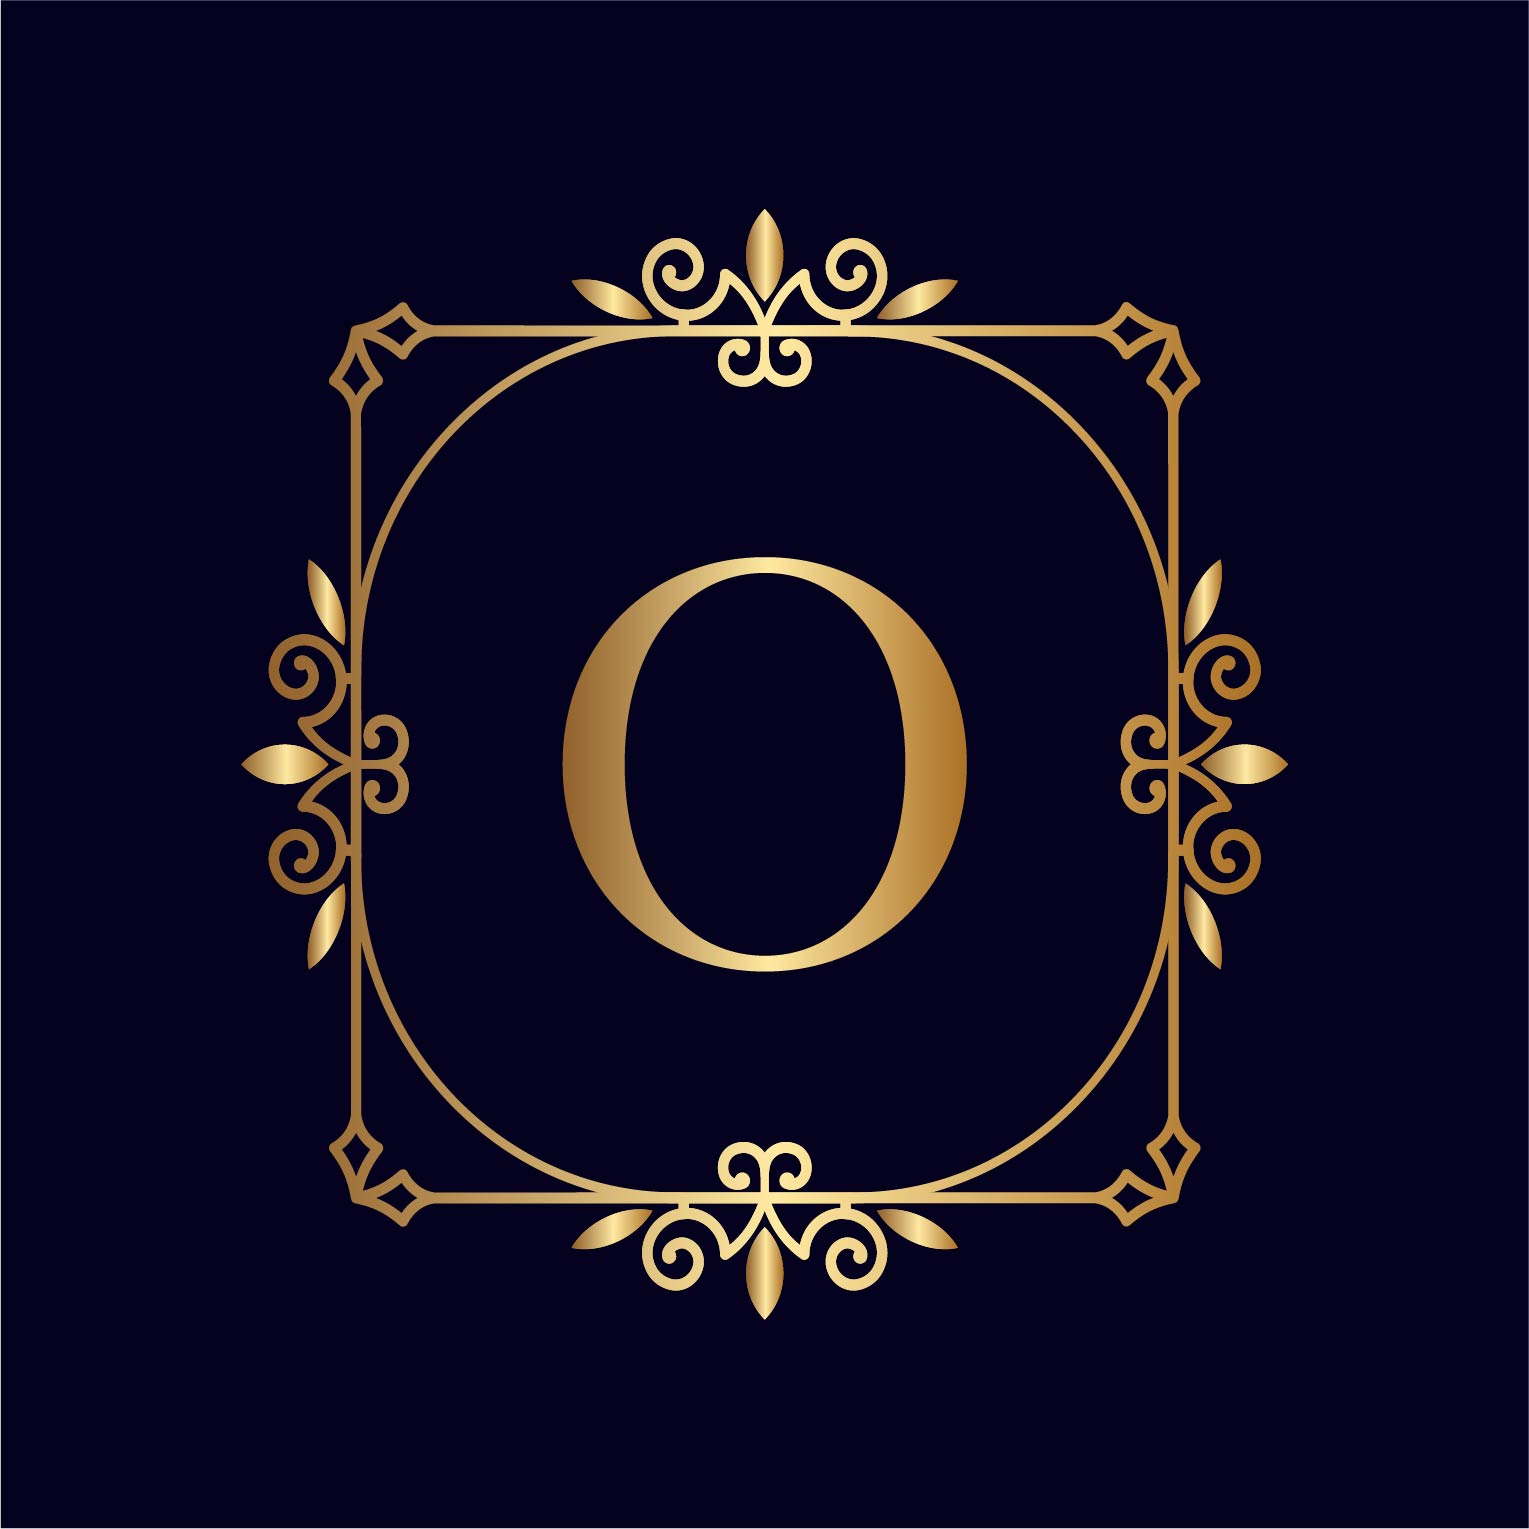 Artistic Gold Letter O Logos Design preview image.